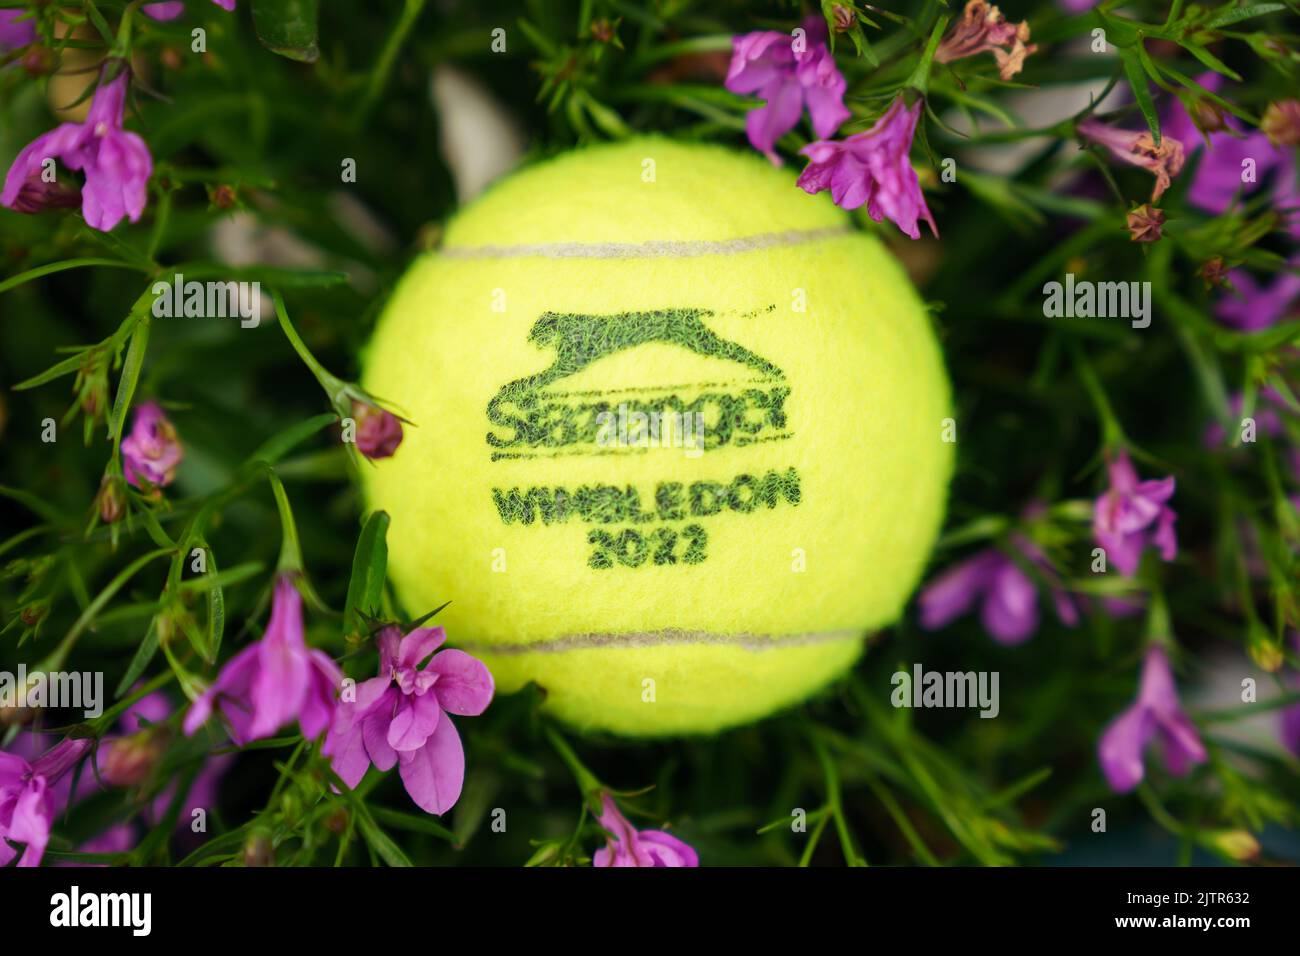 Wimbledon 2022 tennis ball in tournament Hydragea flowers found on site Stock Photo